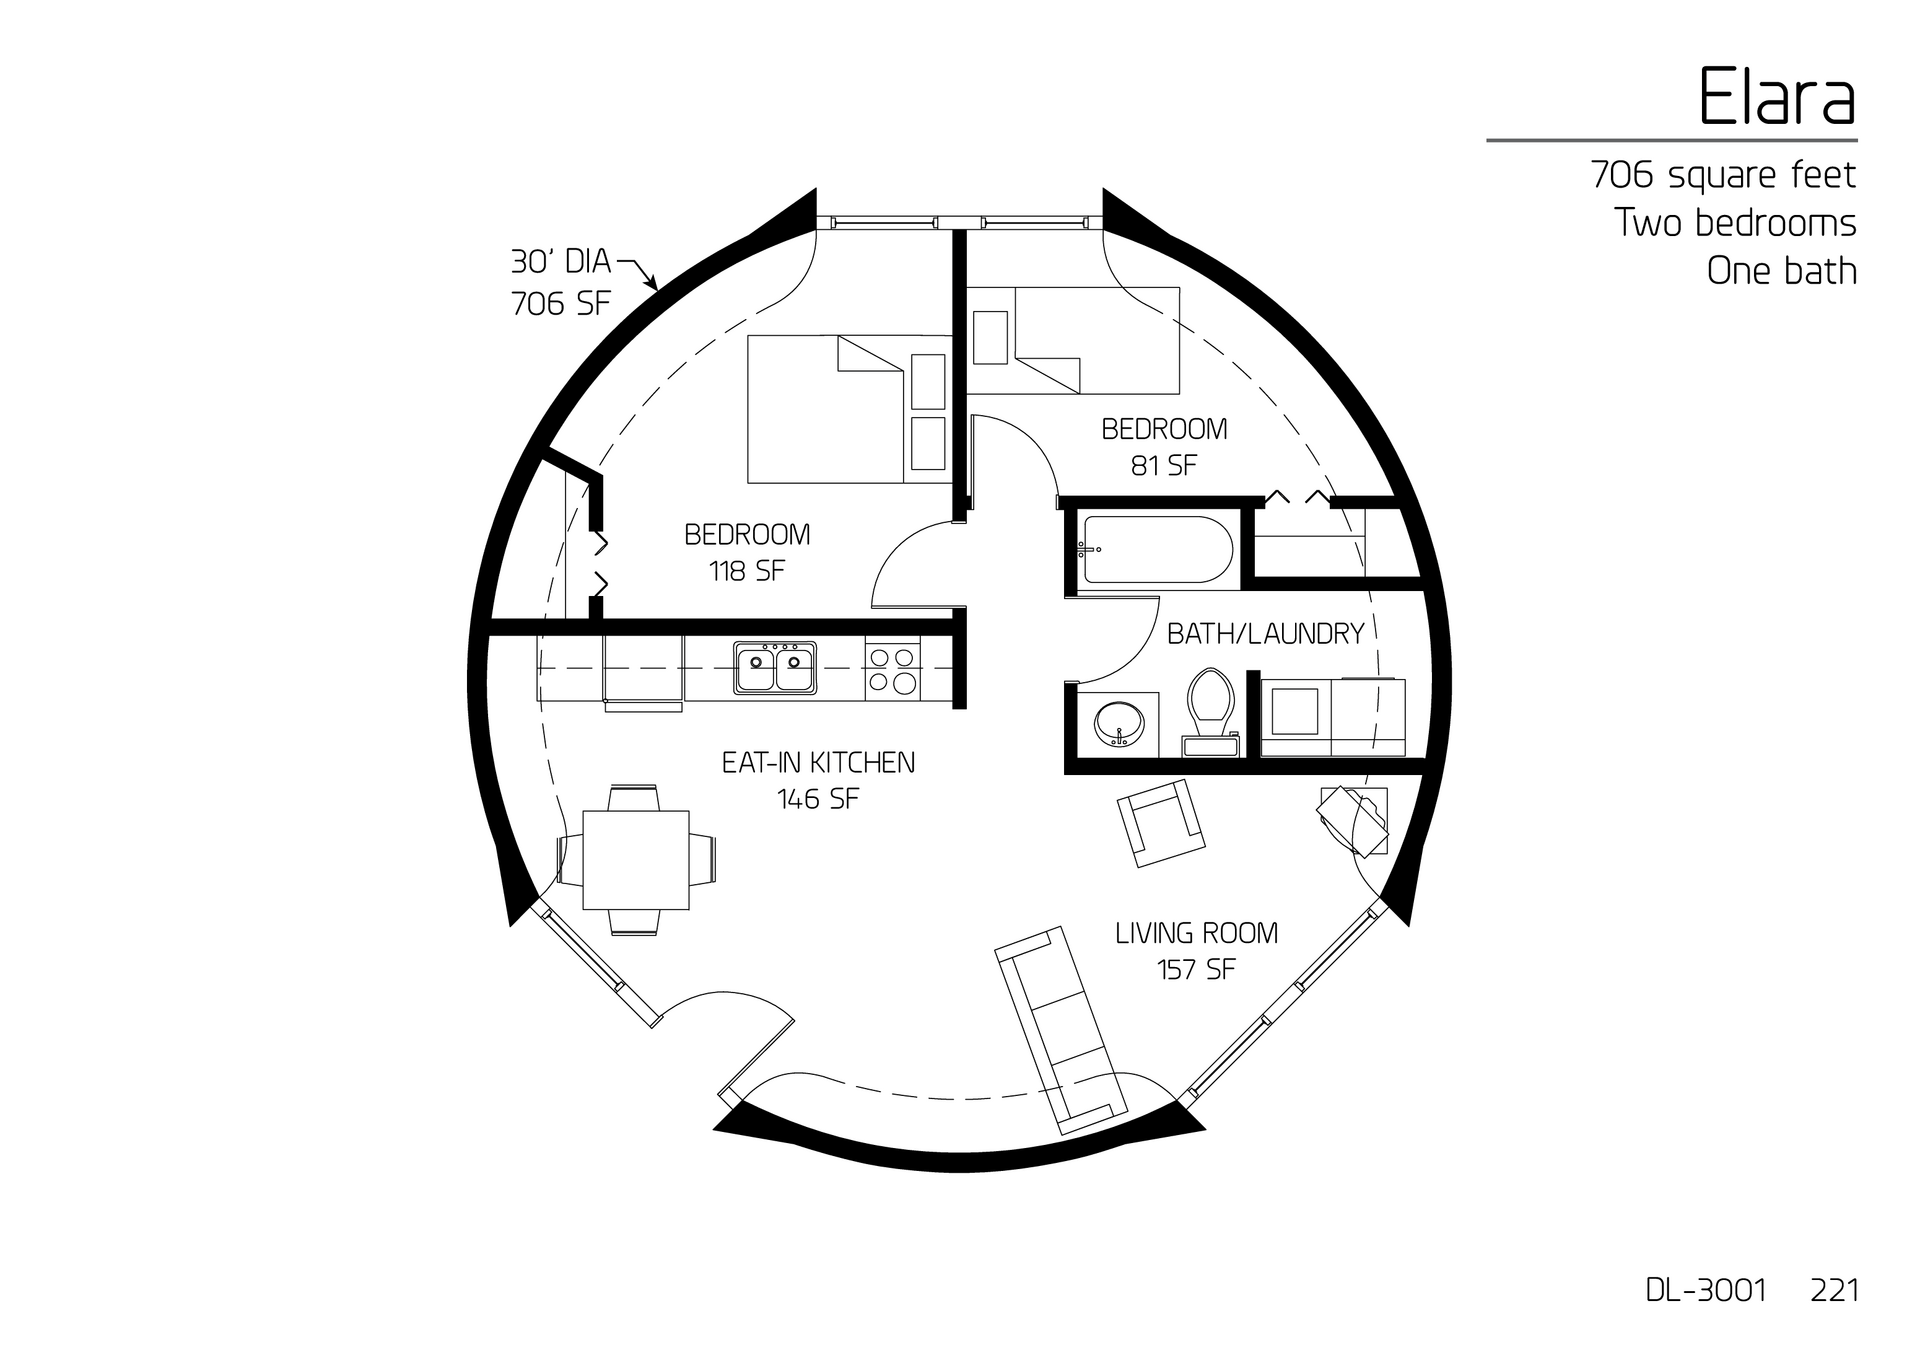 Elara: A 30' Diameter, 706 SF,  Two-Bedroom, One-Bath Floor Plan.